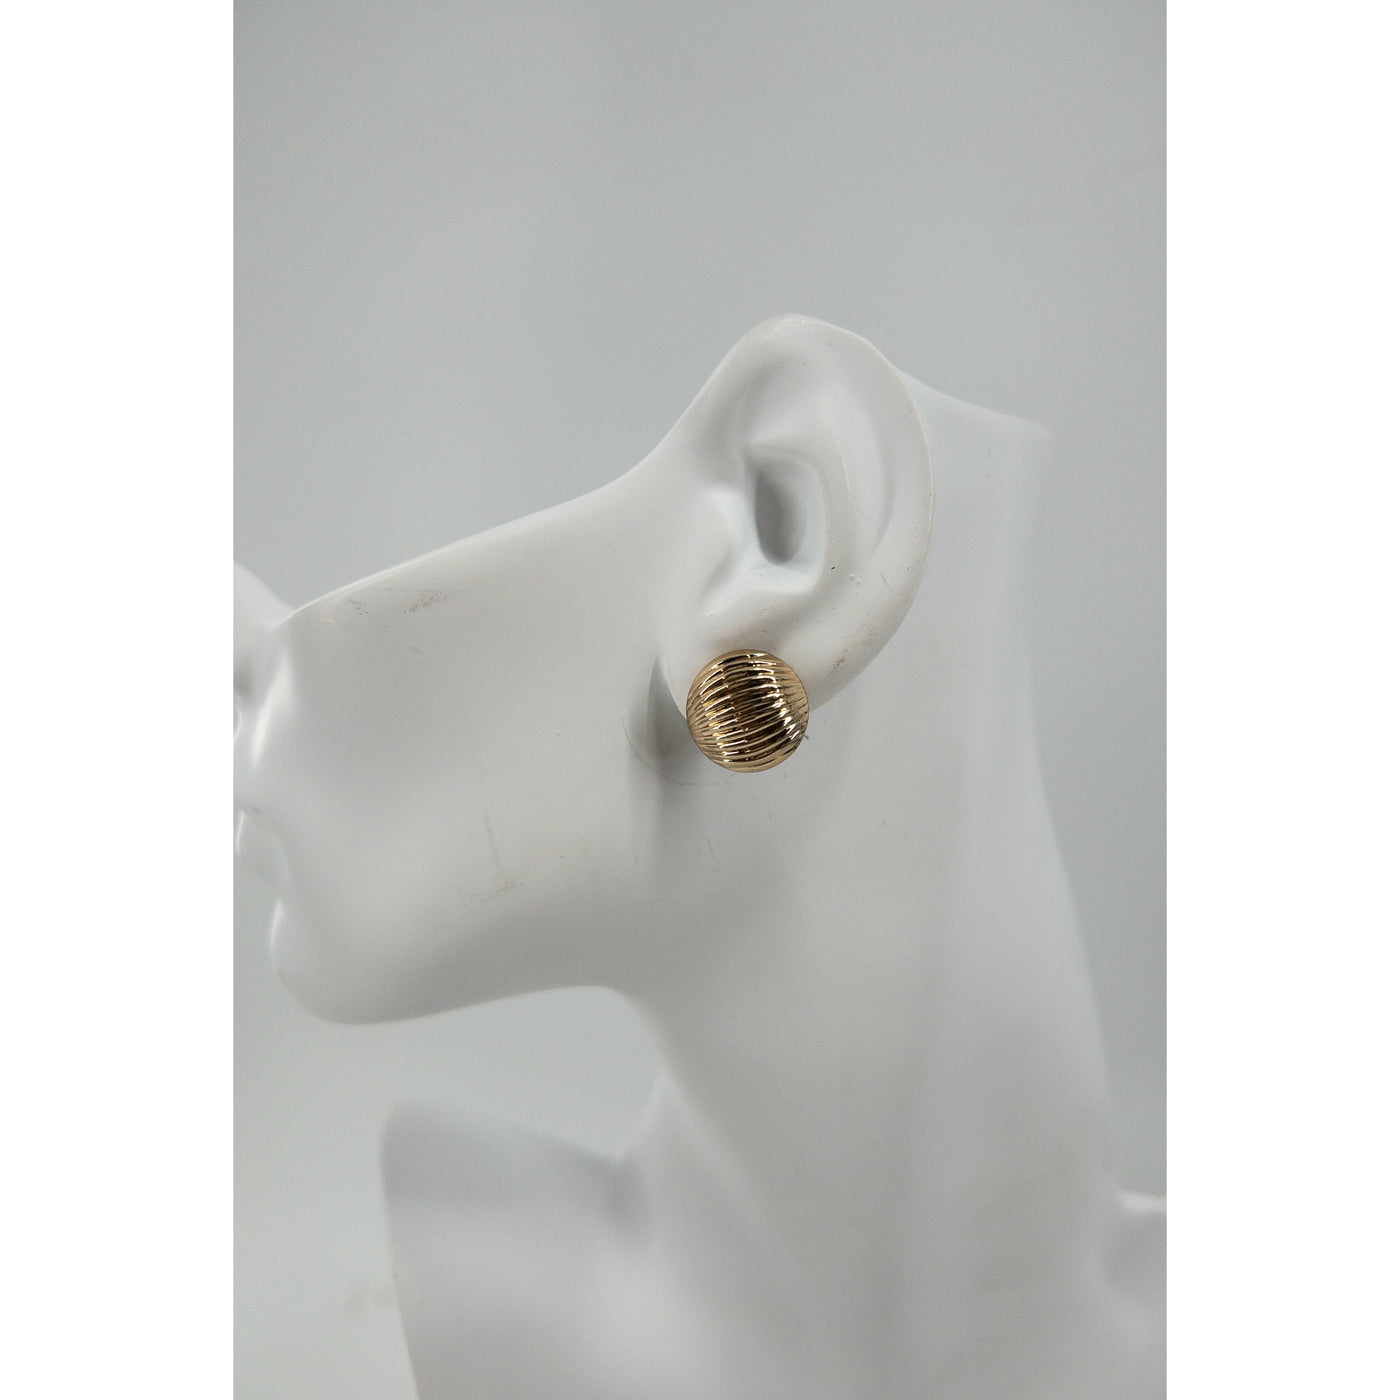 Statement Round Gold stud earrings - Trufacebygrace